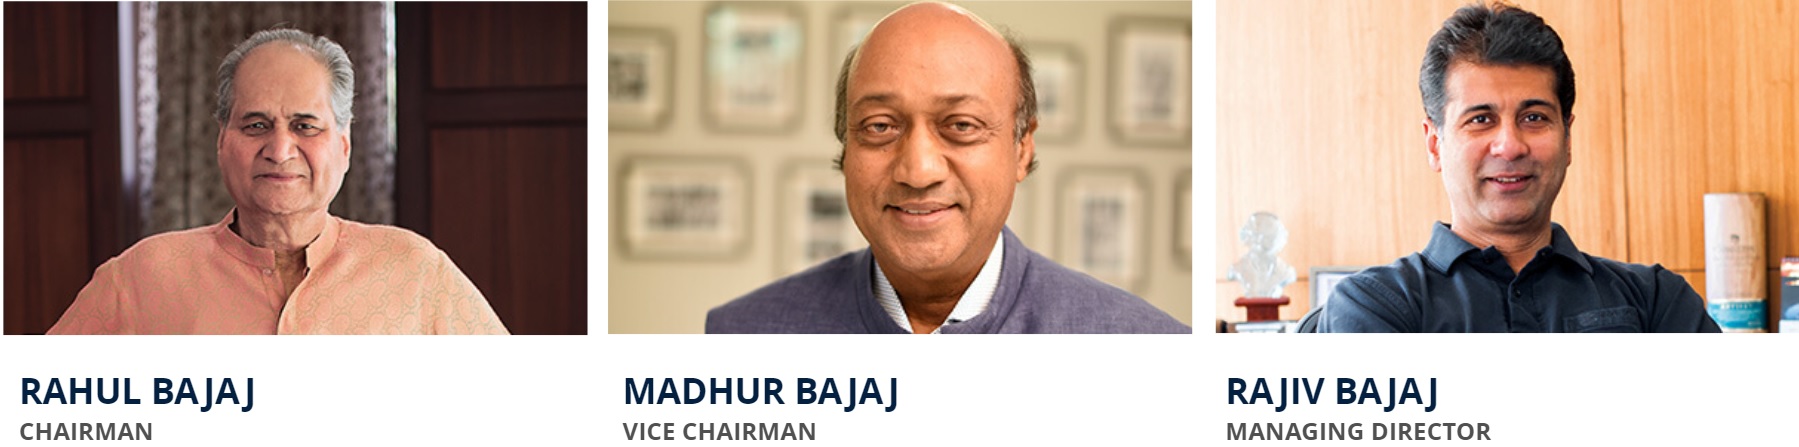 Owner of Bajaj Auto Limited - Board of Directors - Wiki - Profile